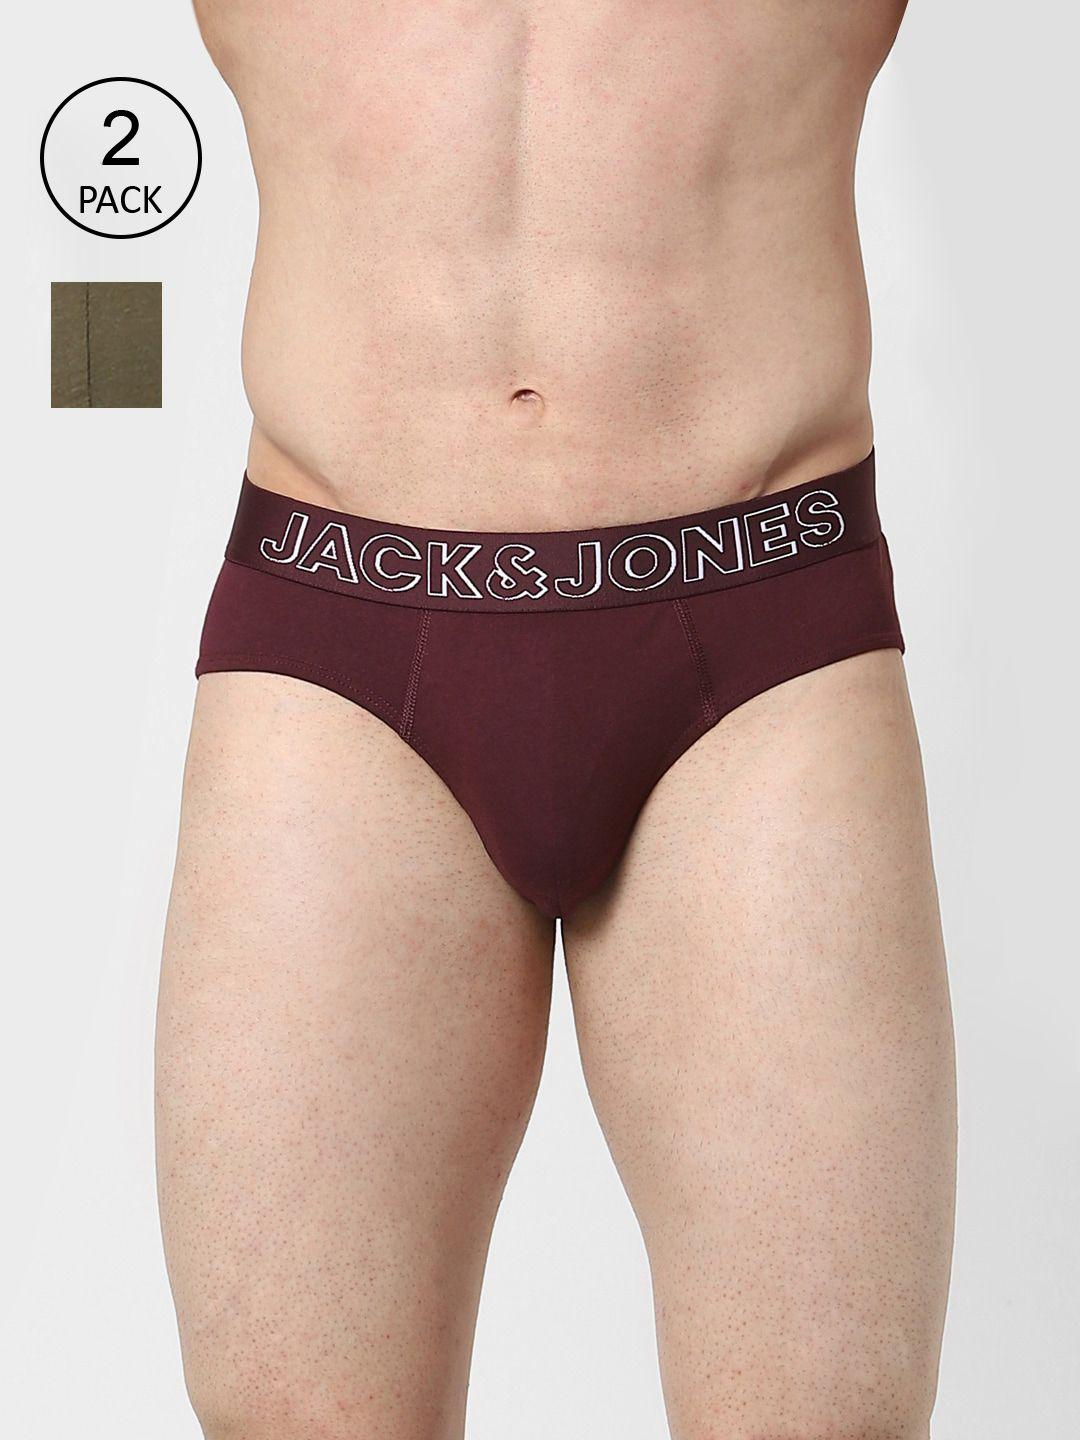 jack-&-jones-men-pack-of-2-solid-cotton-basic-briefs---191604004-2